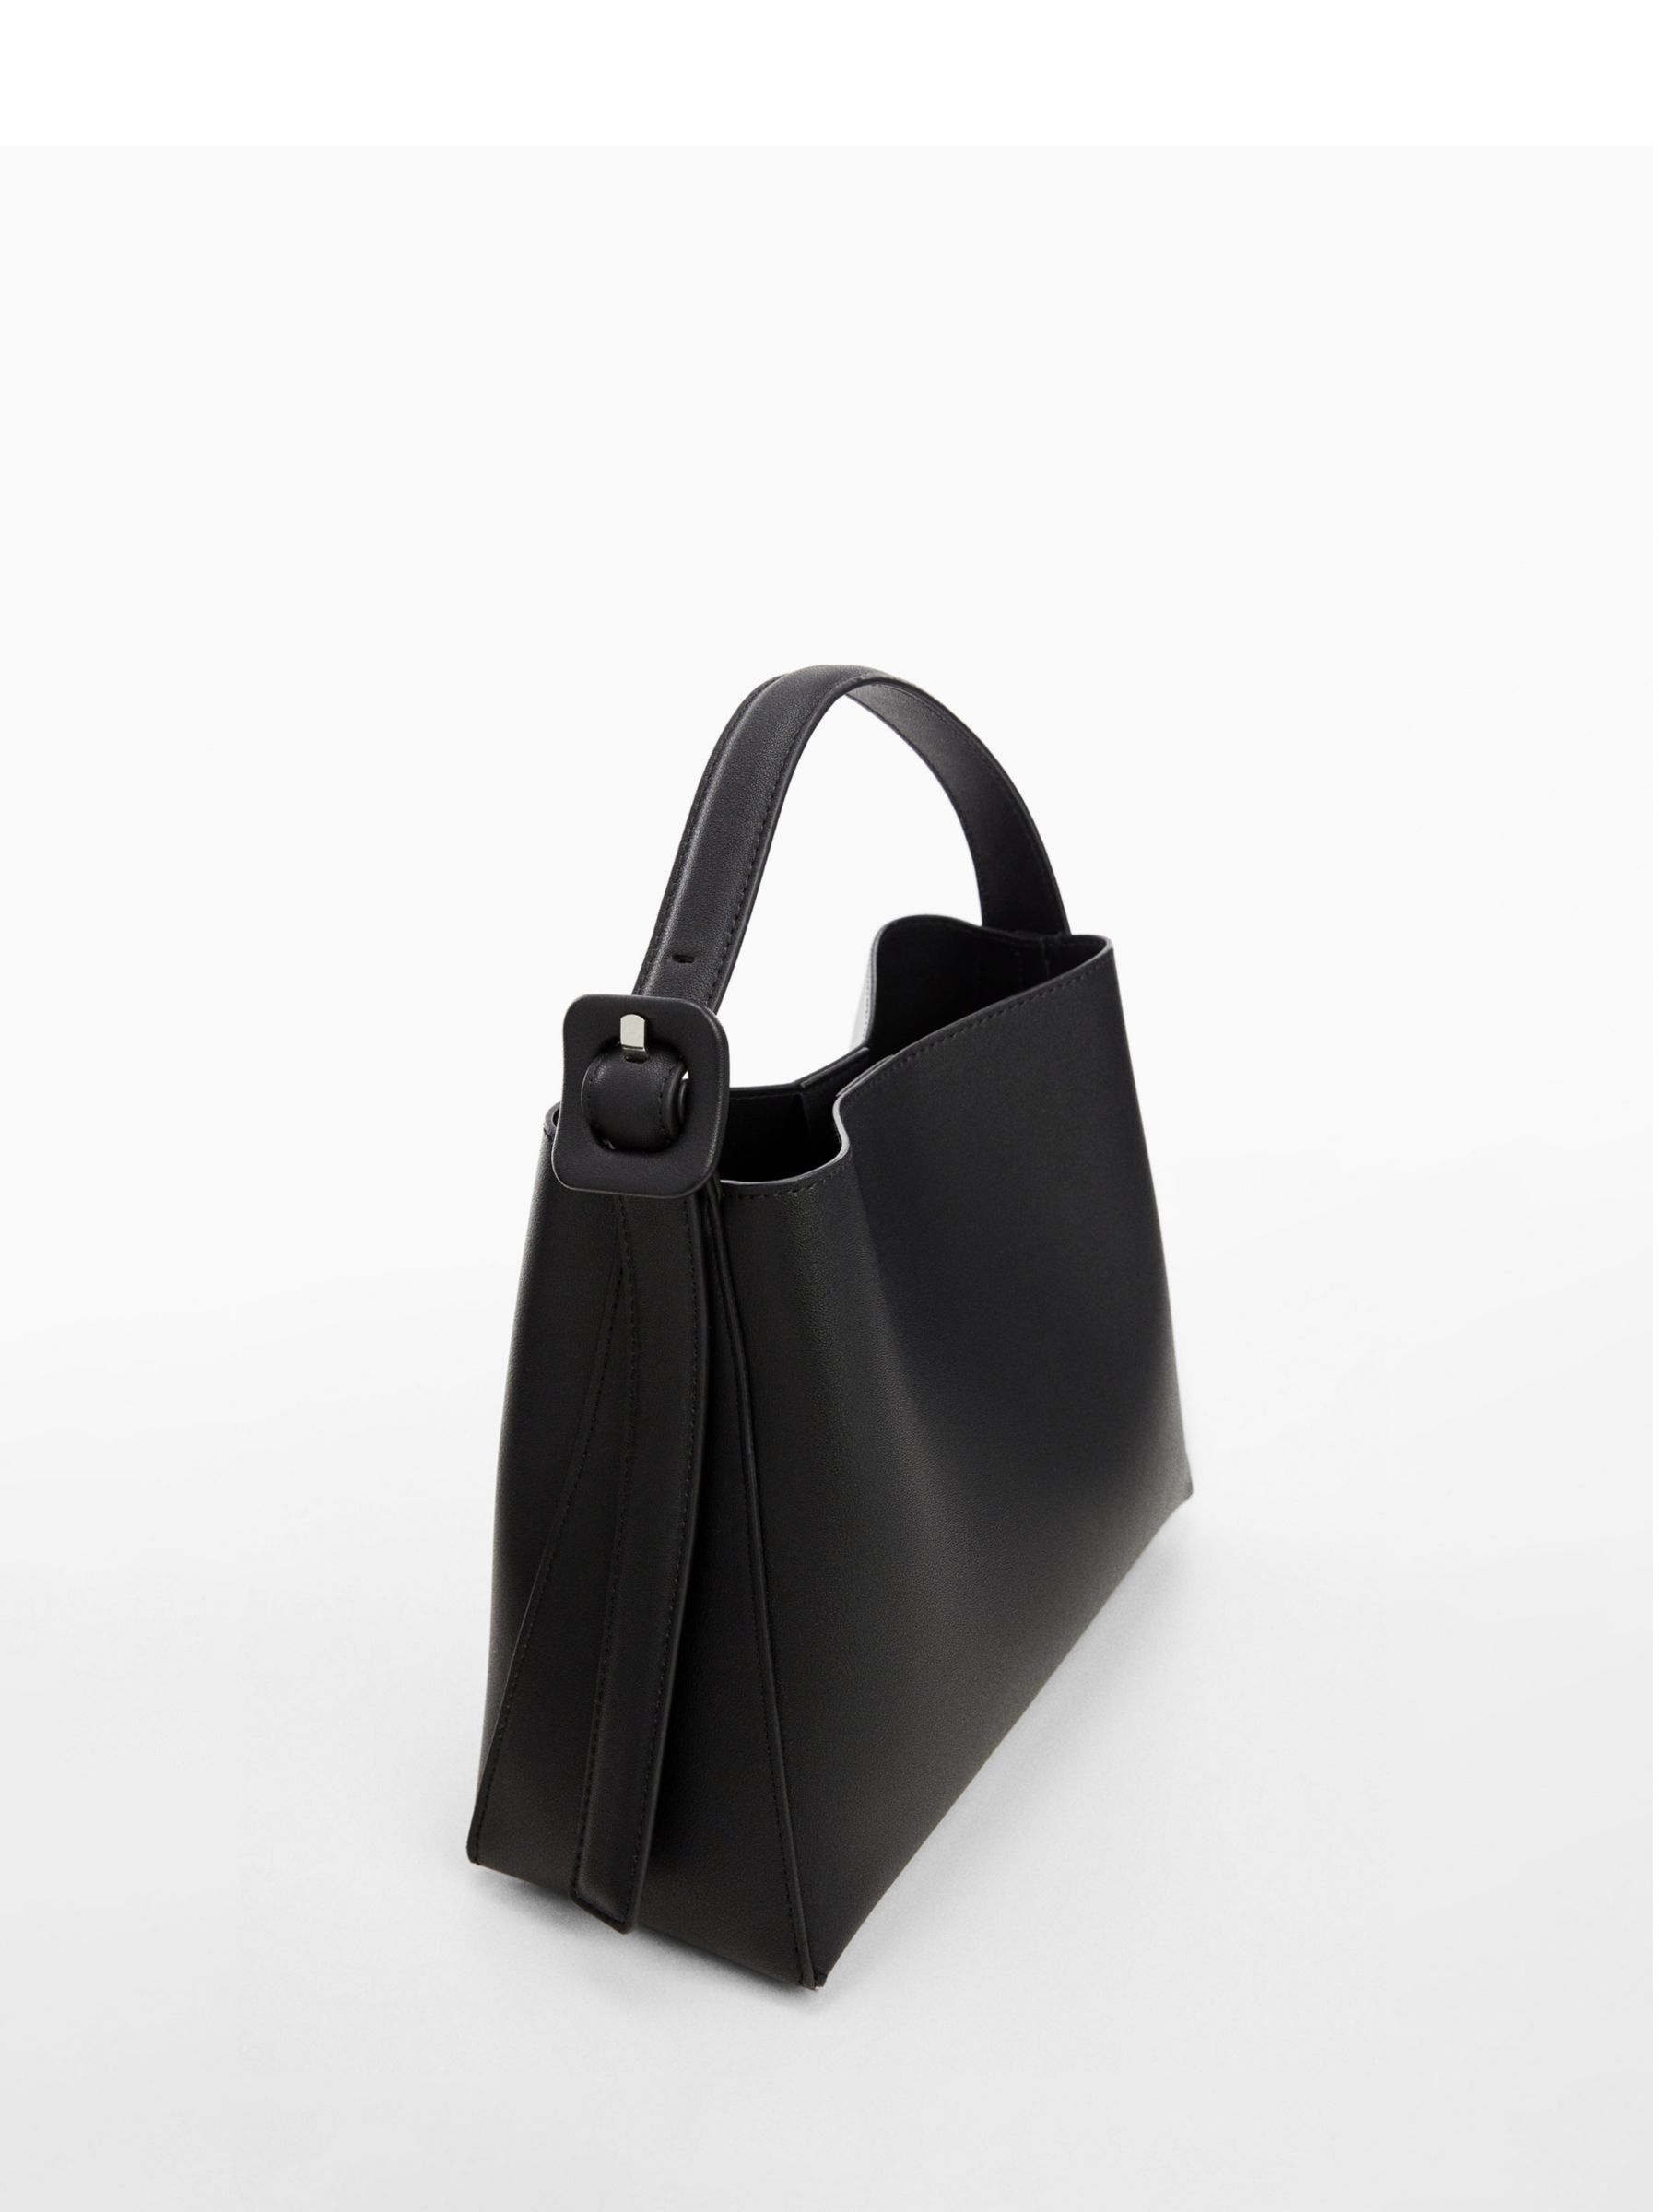 Mango Winnie Small Shopper Bag, Black, One Size